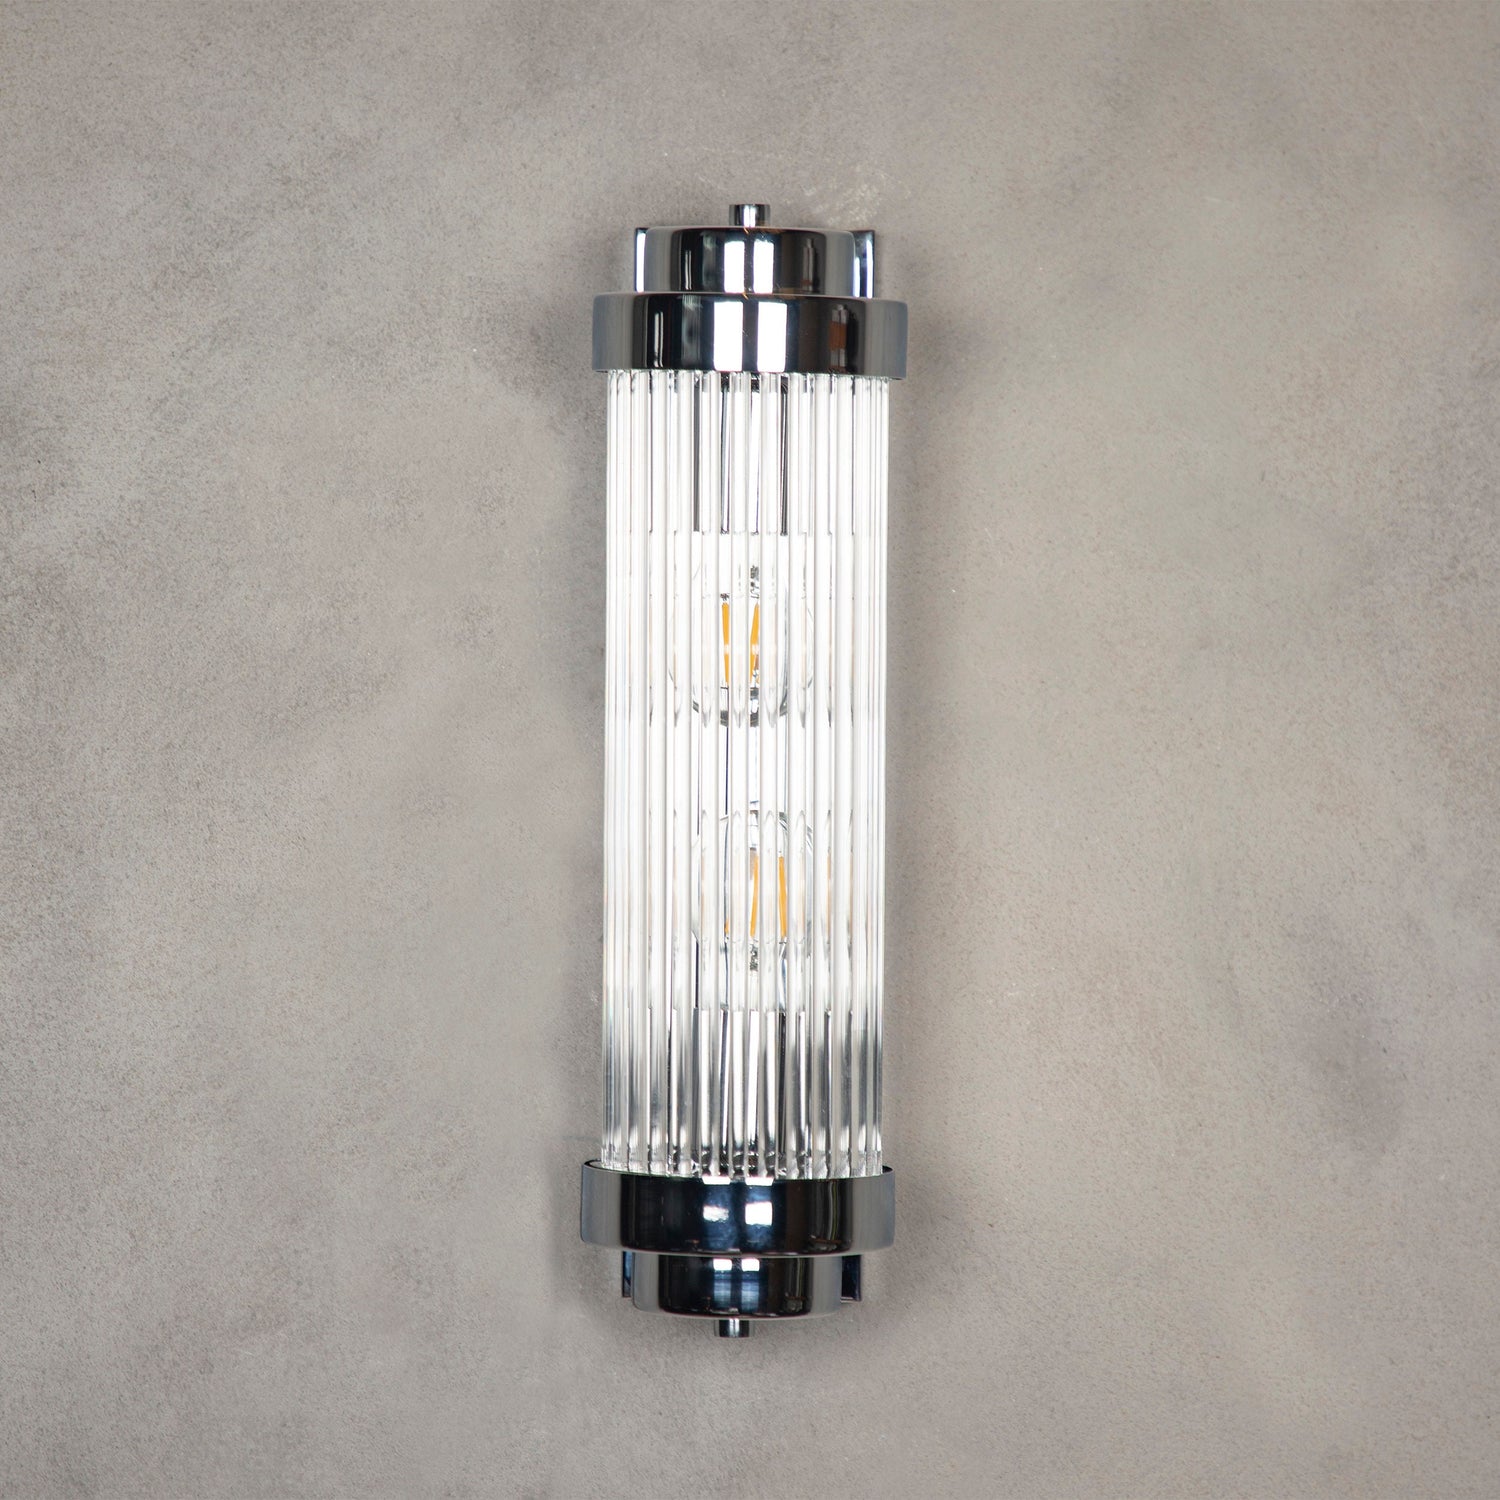 Unique Glass Rod Wall Lamp, Handmade Brass Wall Light, Modern Decor Bedside Lighting Fixture, Black Vanity Sconce, MODEL: SUMELA